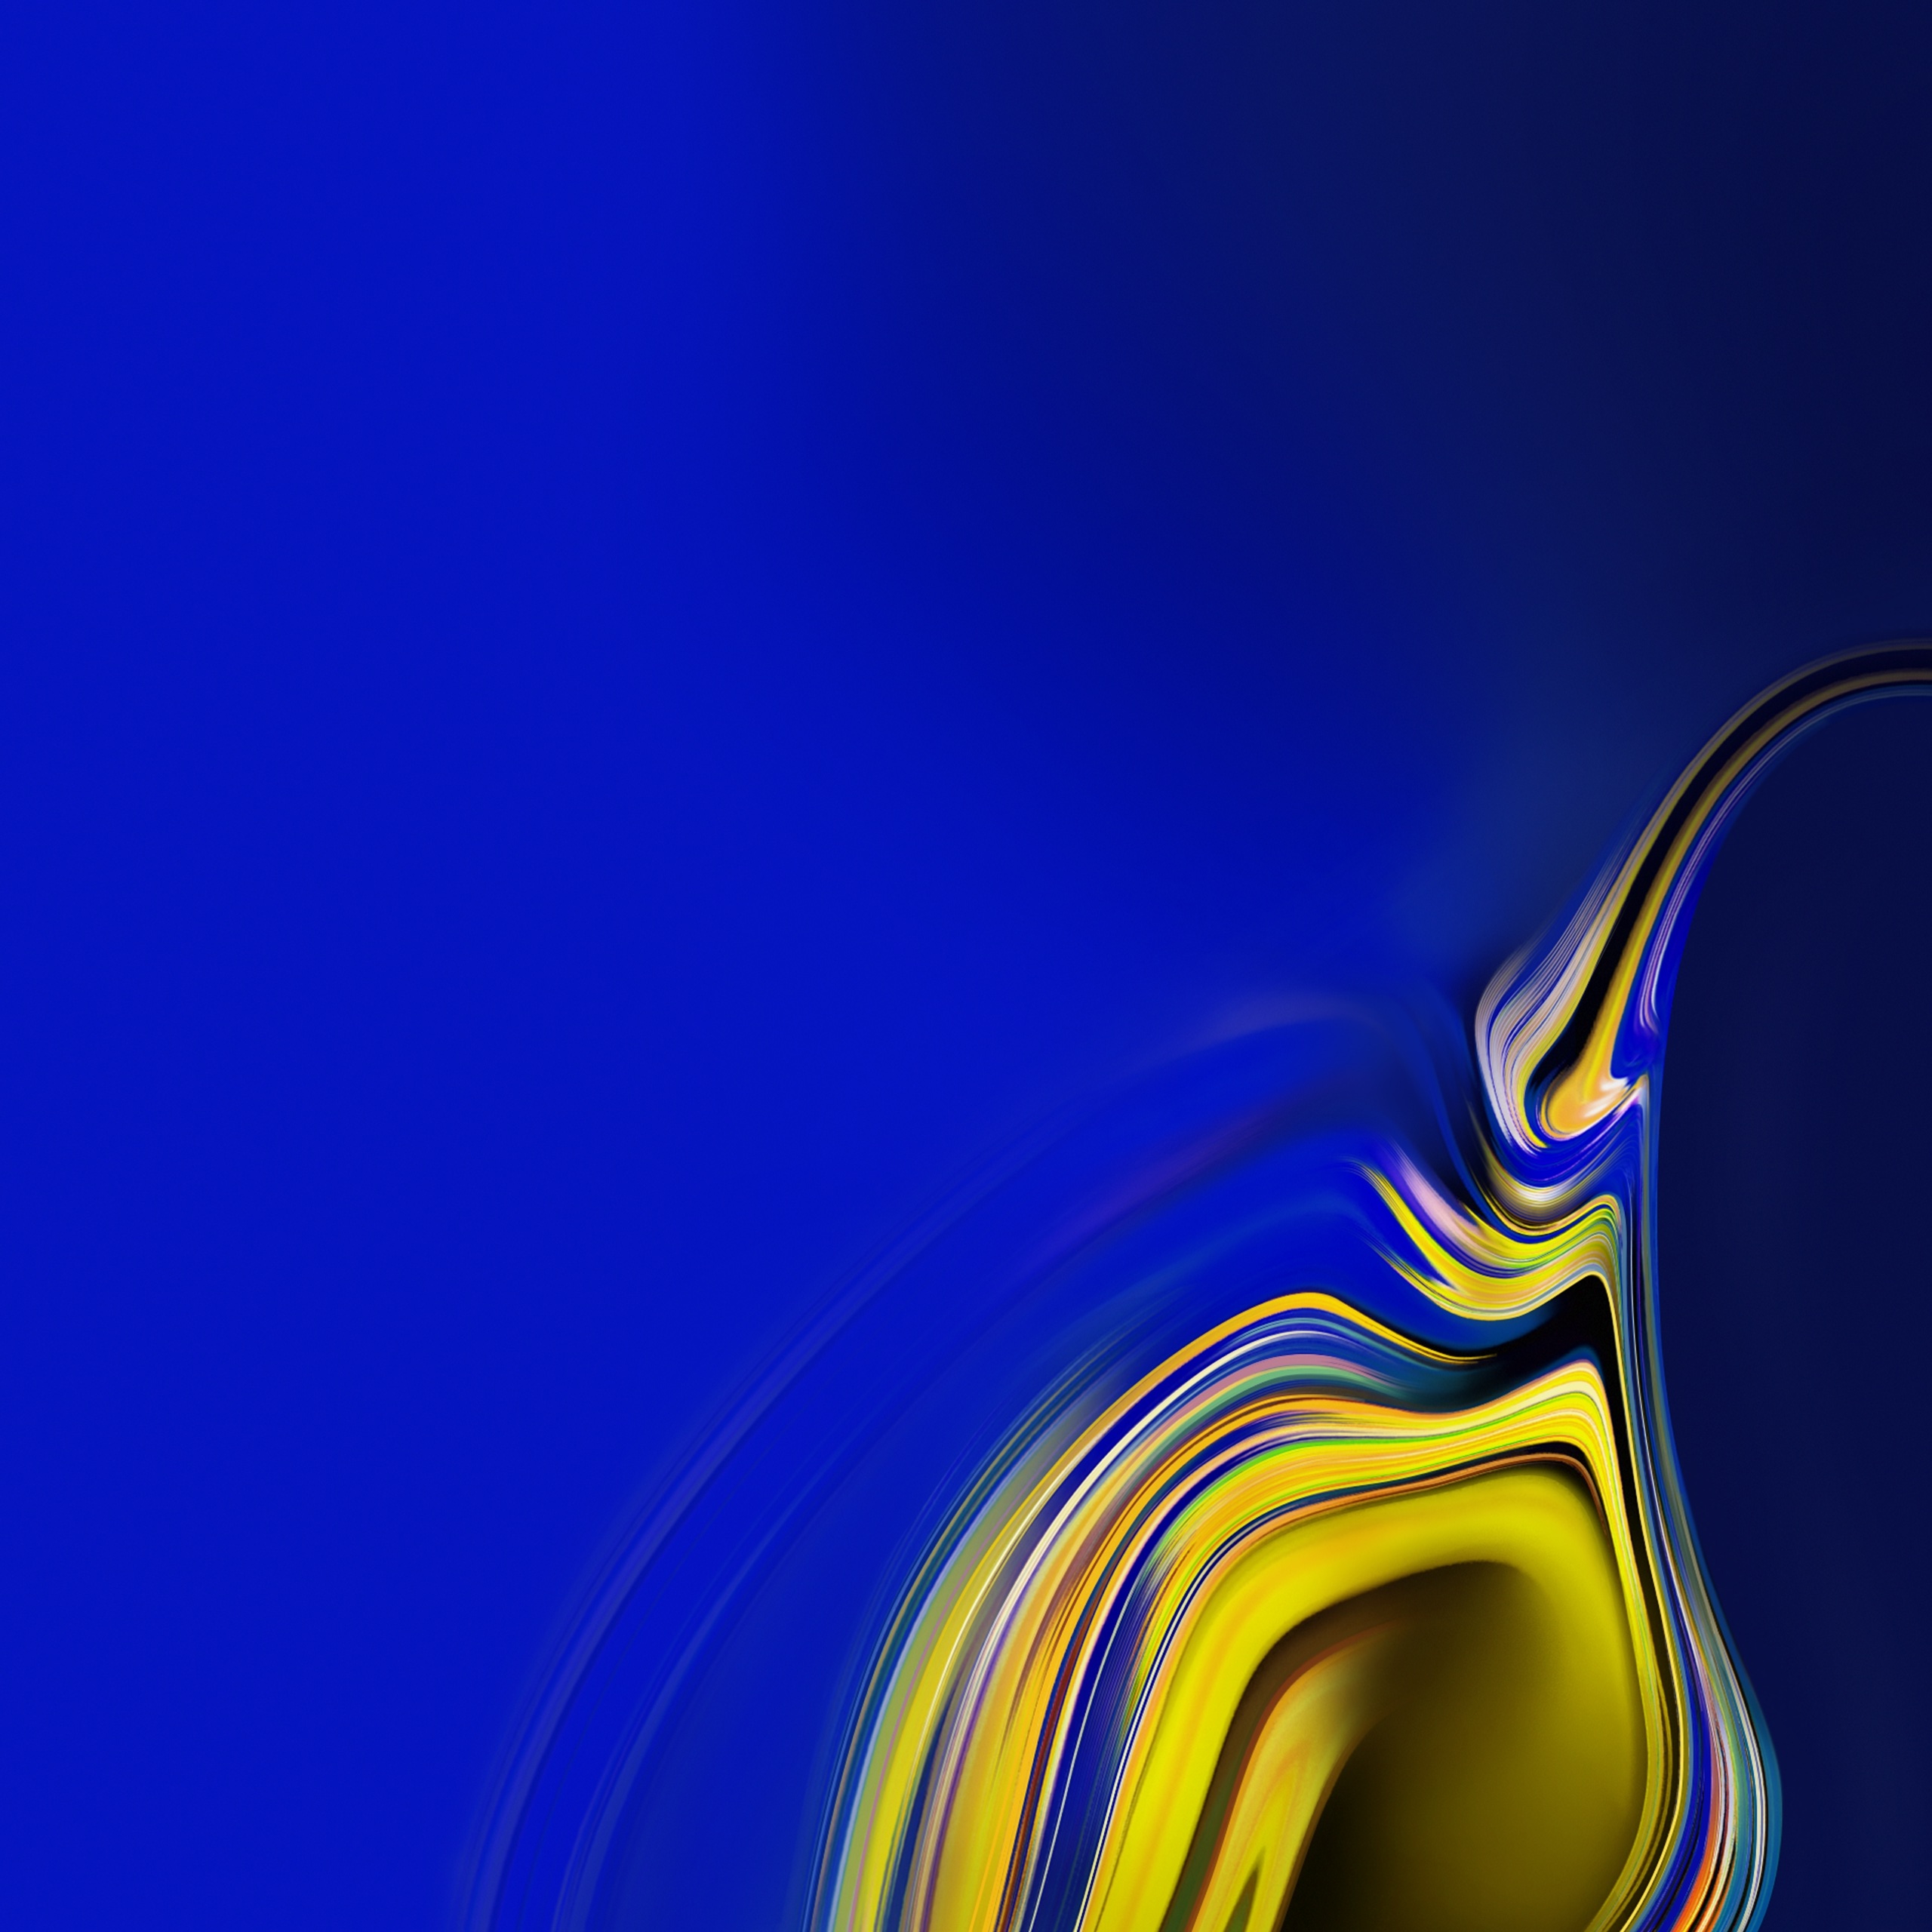 fond d'écran samsung galaxy,bleu,bleu cobalt,jaune,l'eau,bleu électrique